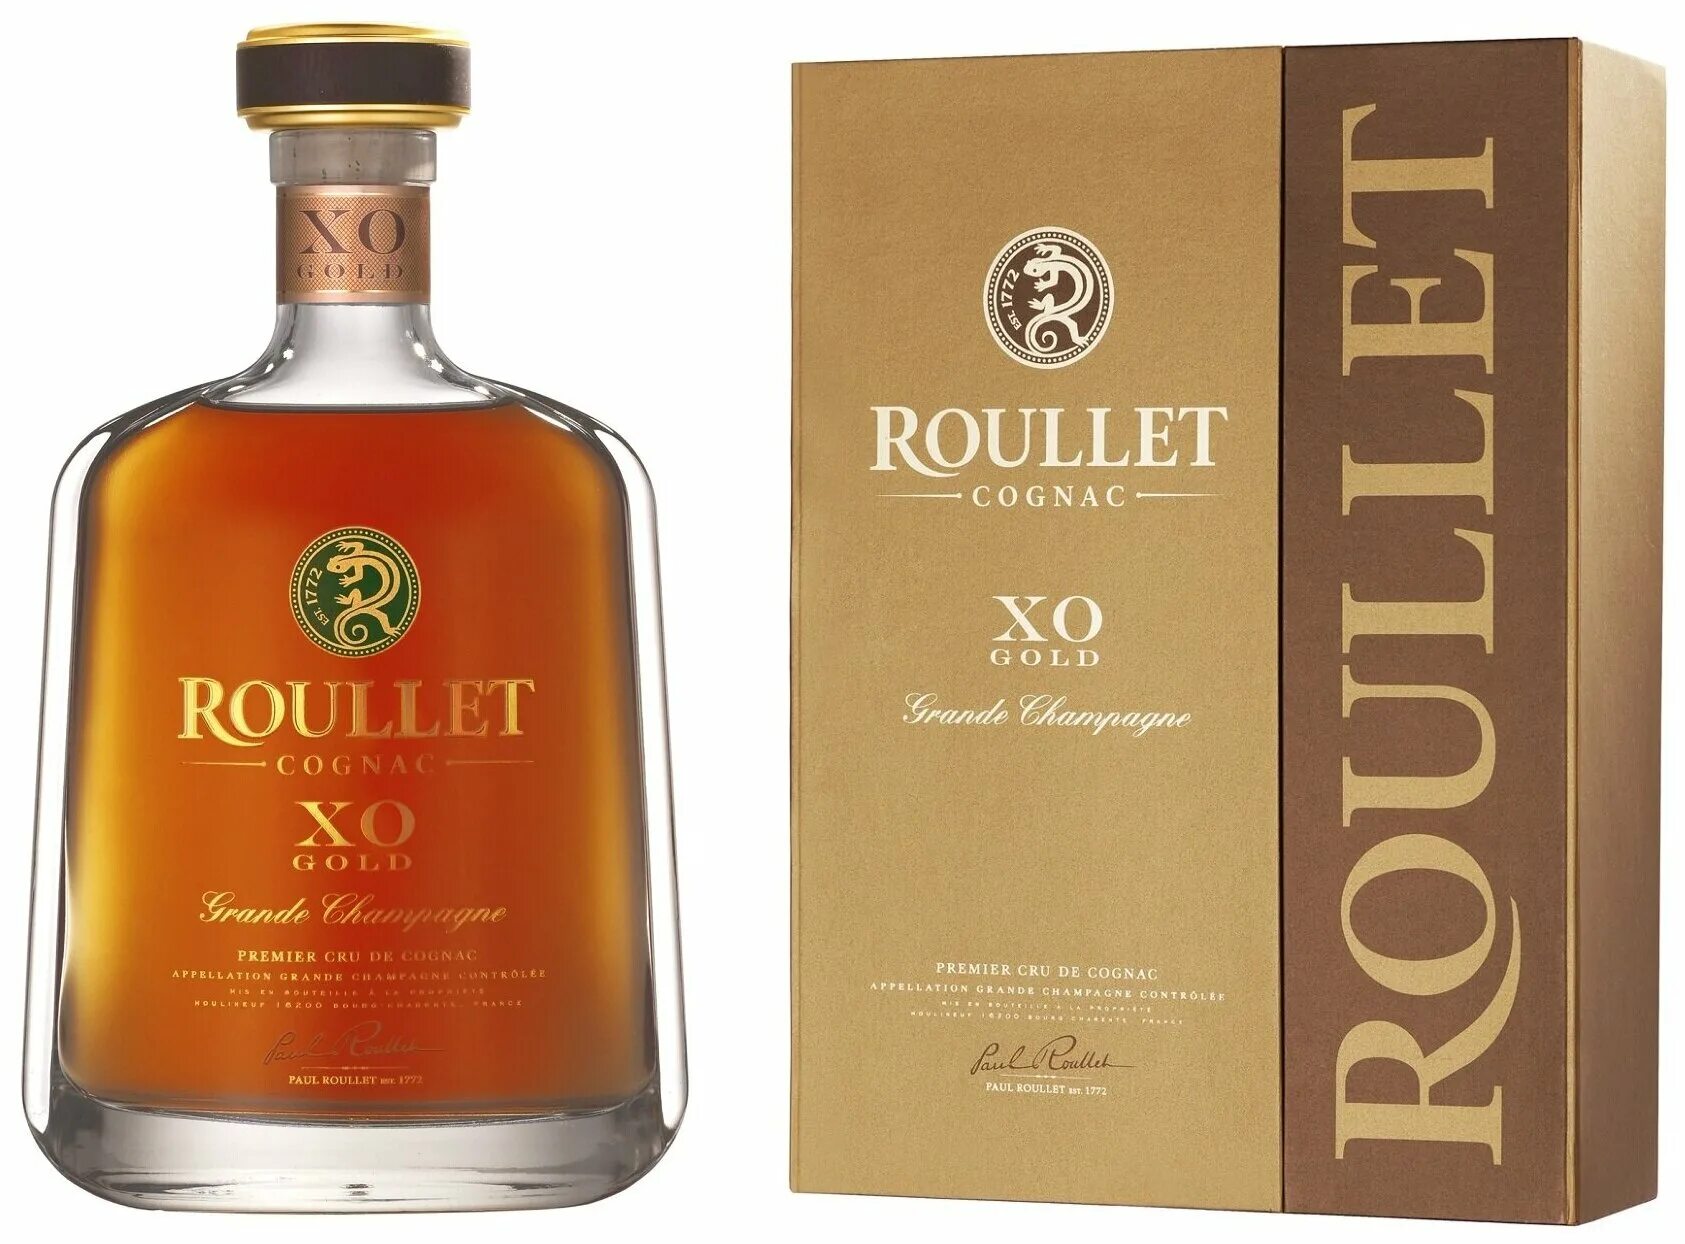 Roullet cognac цена. Коньяк Роулетт. Коньяк Roullet Cadet, 0.7. Коньяк Рулле вс. Хо коньяк Roullet.